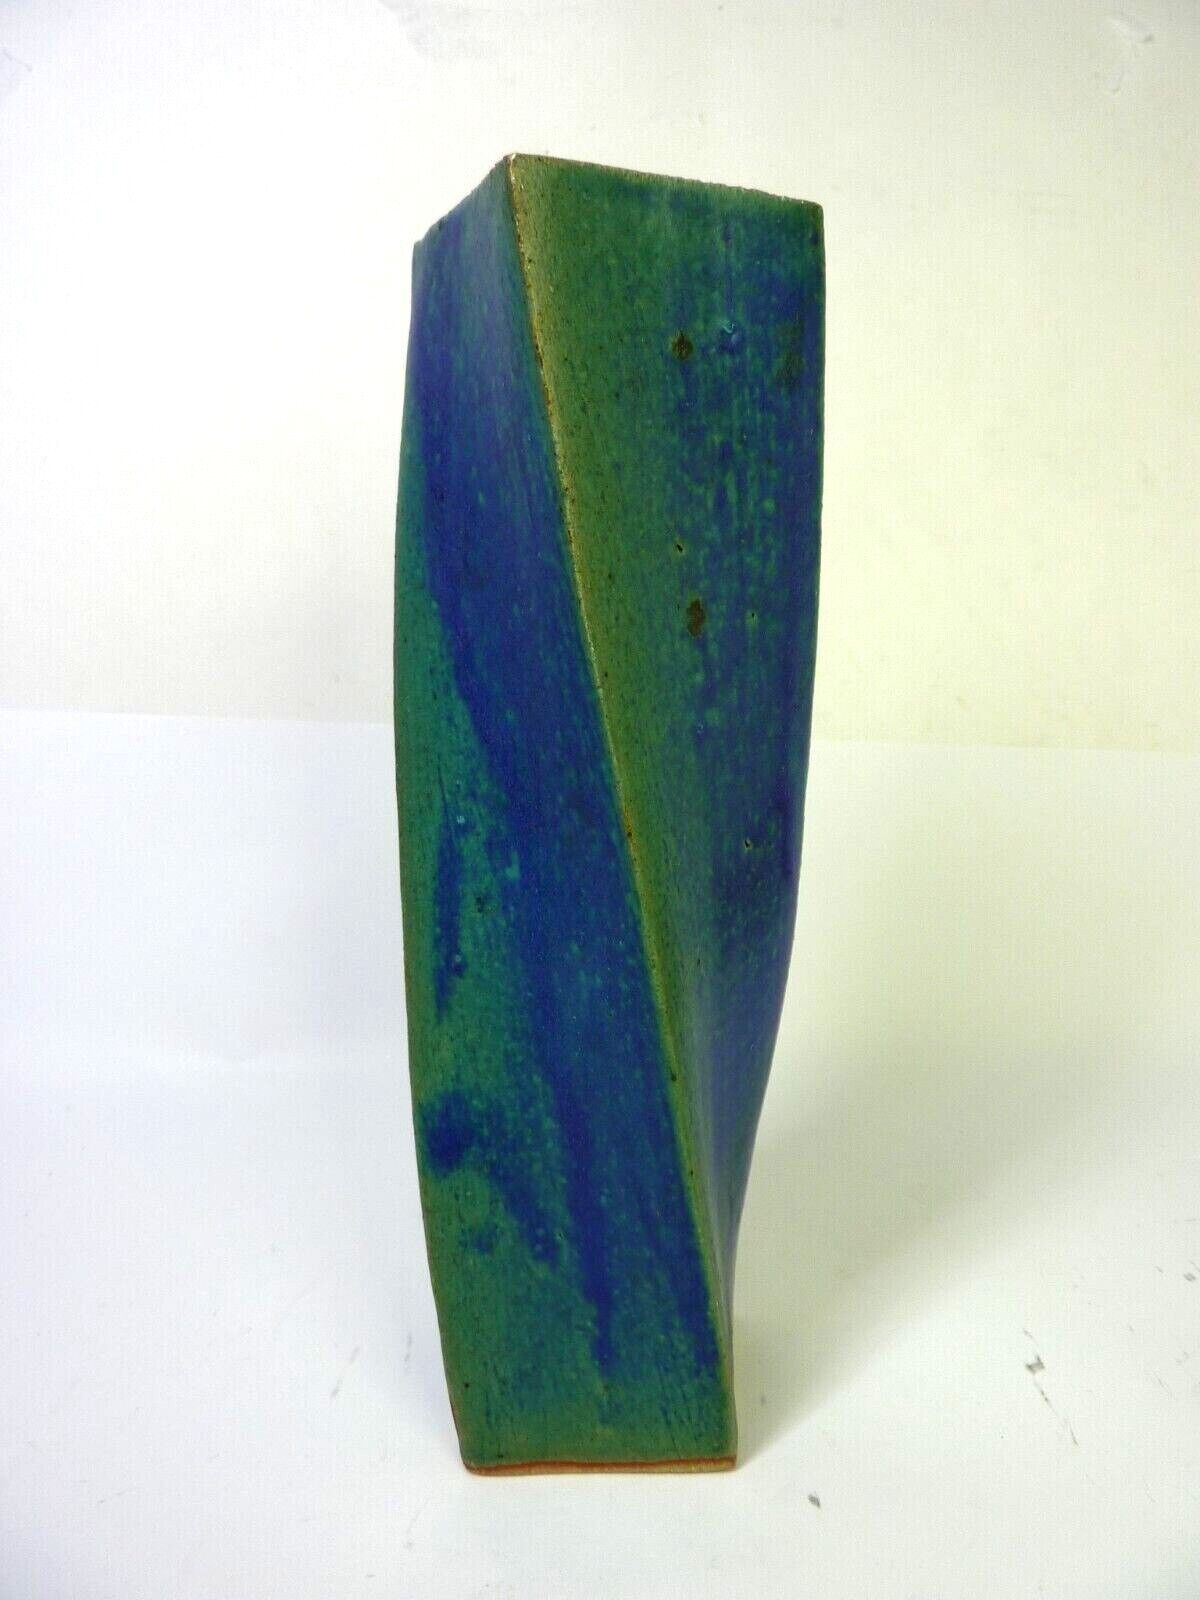 Vtg 1980s La Mers Studio Cobalt/Green Twisted Vase Pottery Very Good Cond. Read